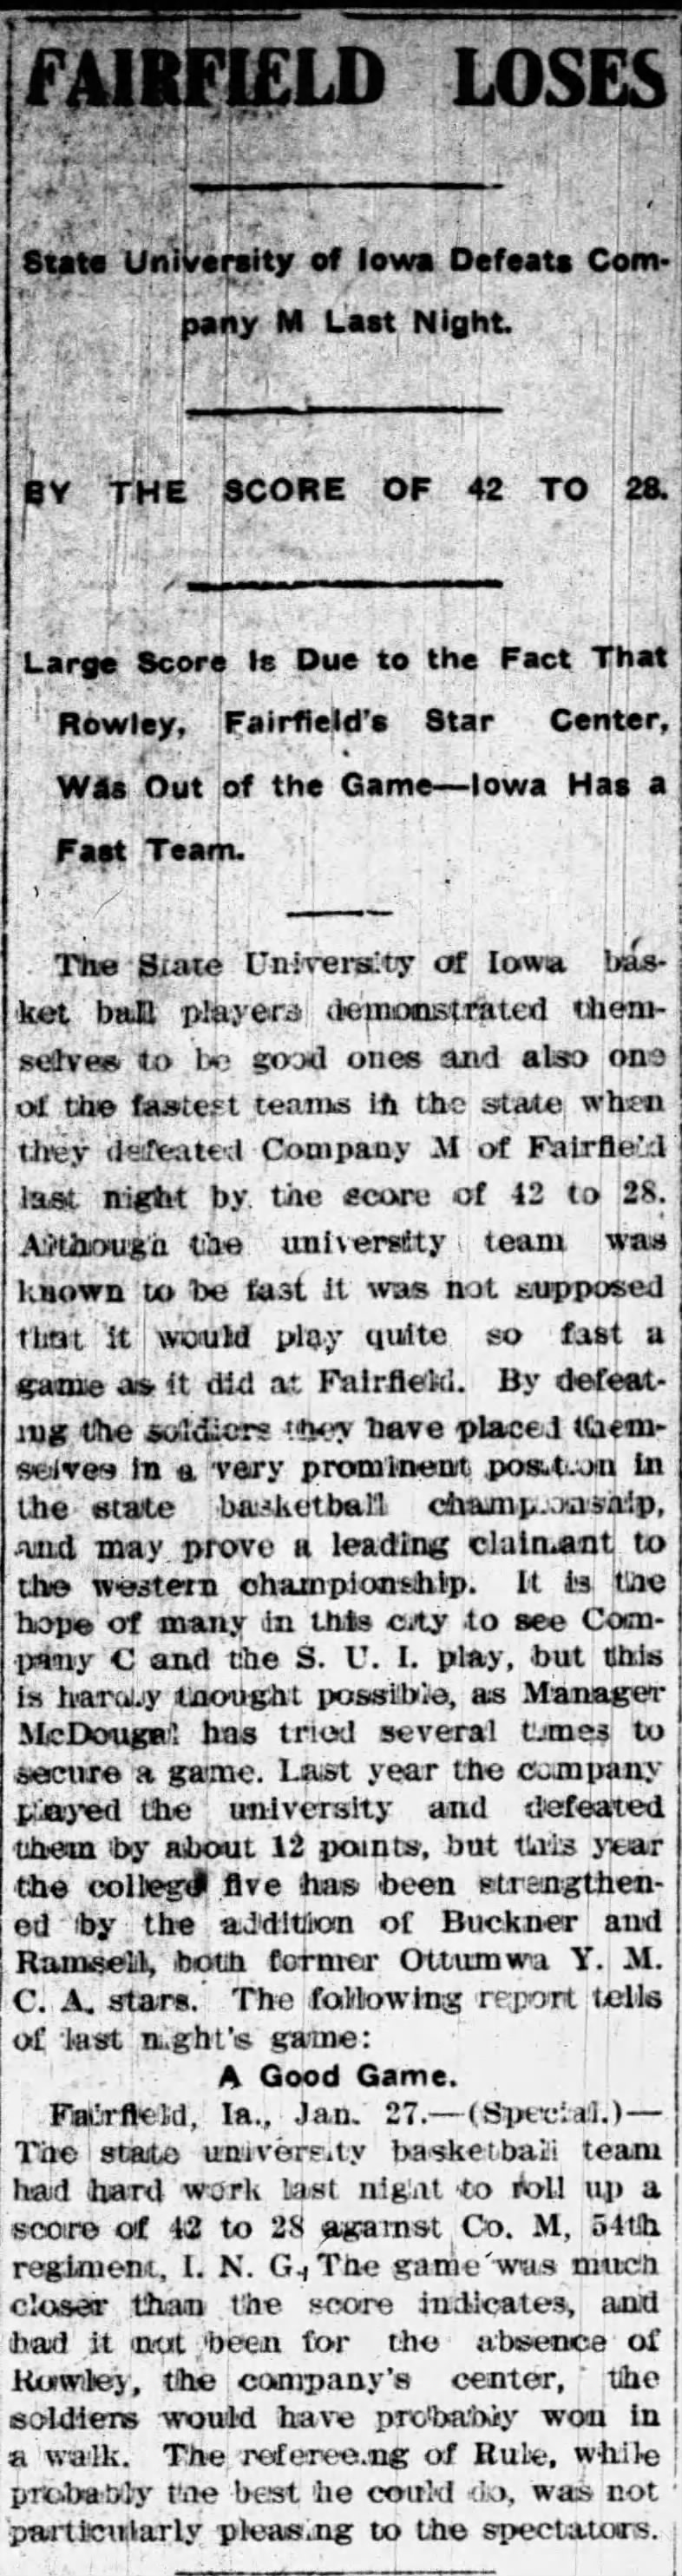 Iowa defeats Iowa National Guard Company M in basketball 42-28 on 1/26/1906